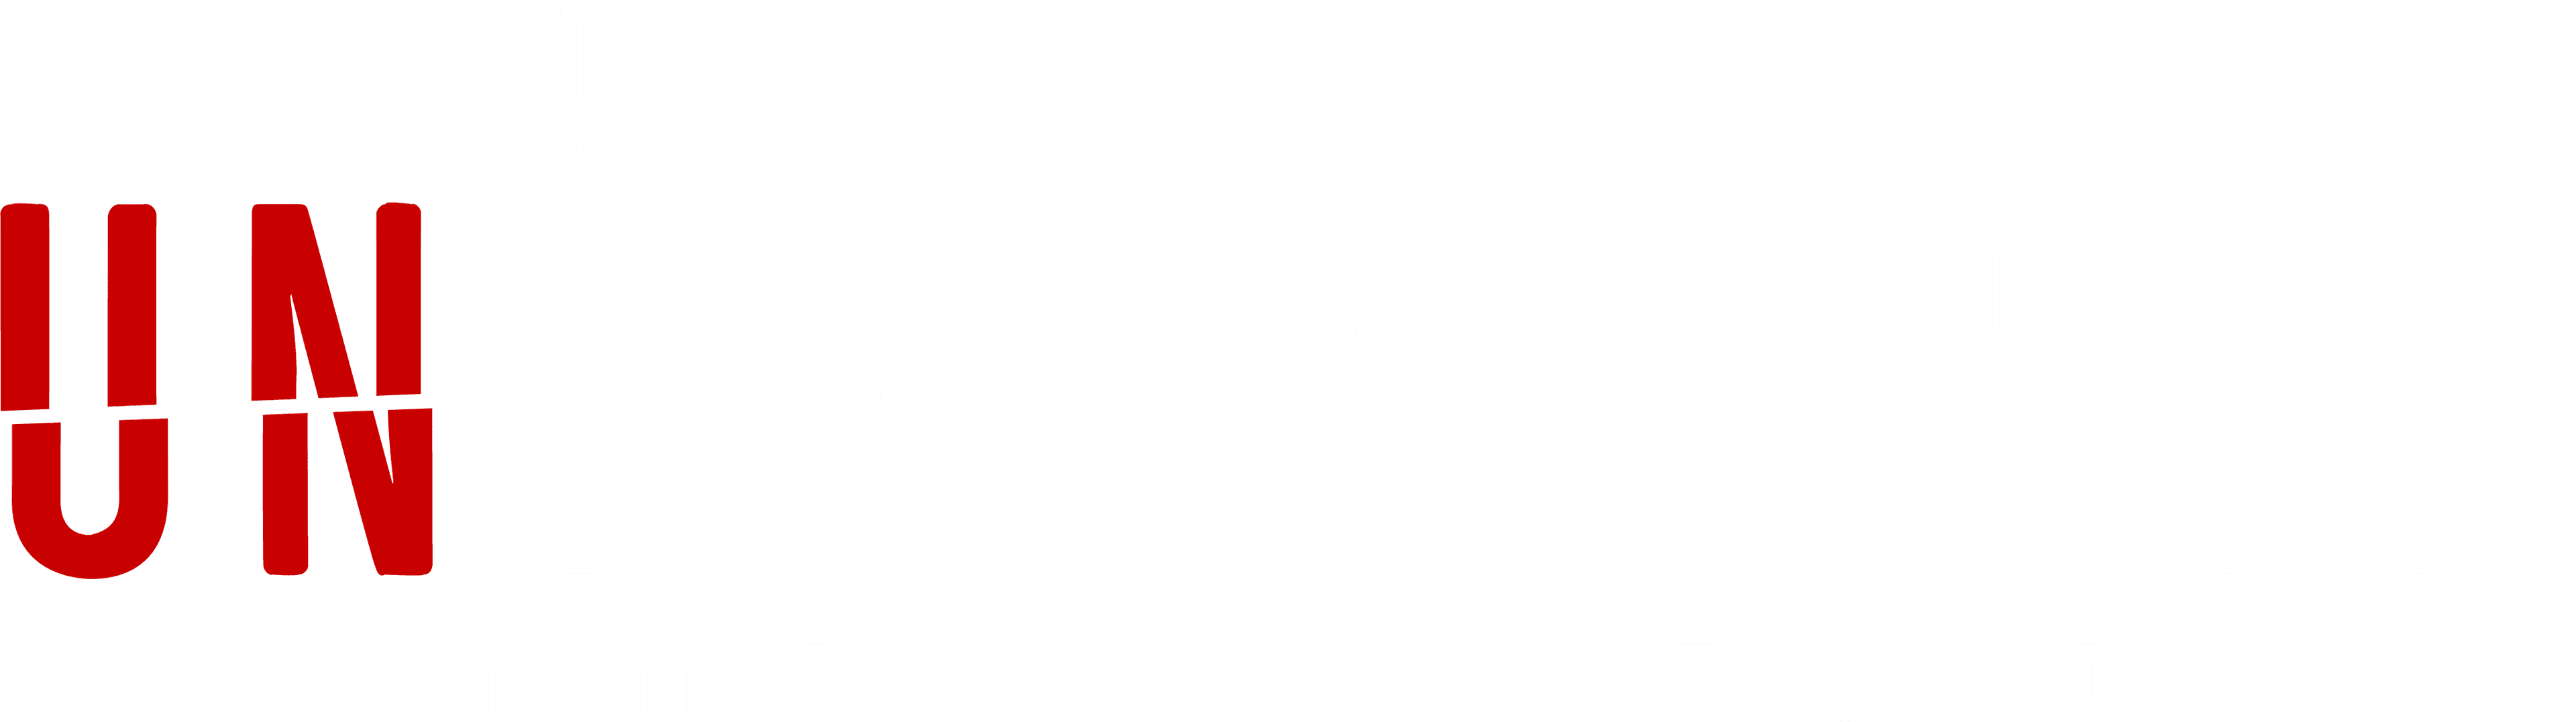 The UnBelievable with Dan Aykroyd logo